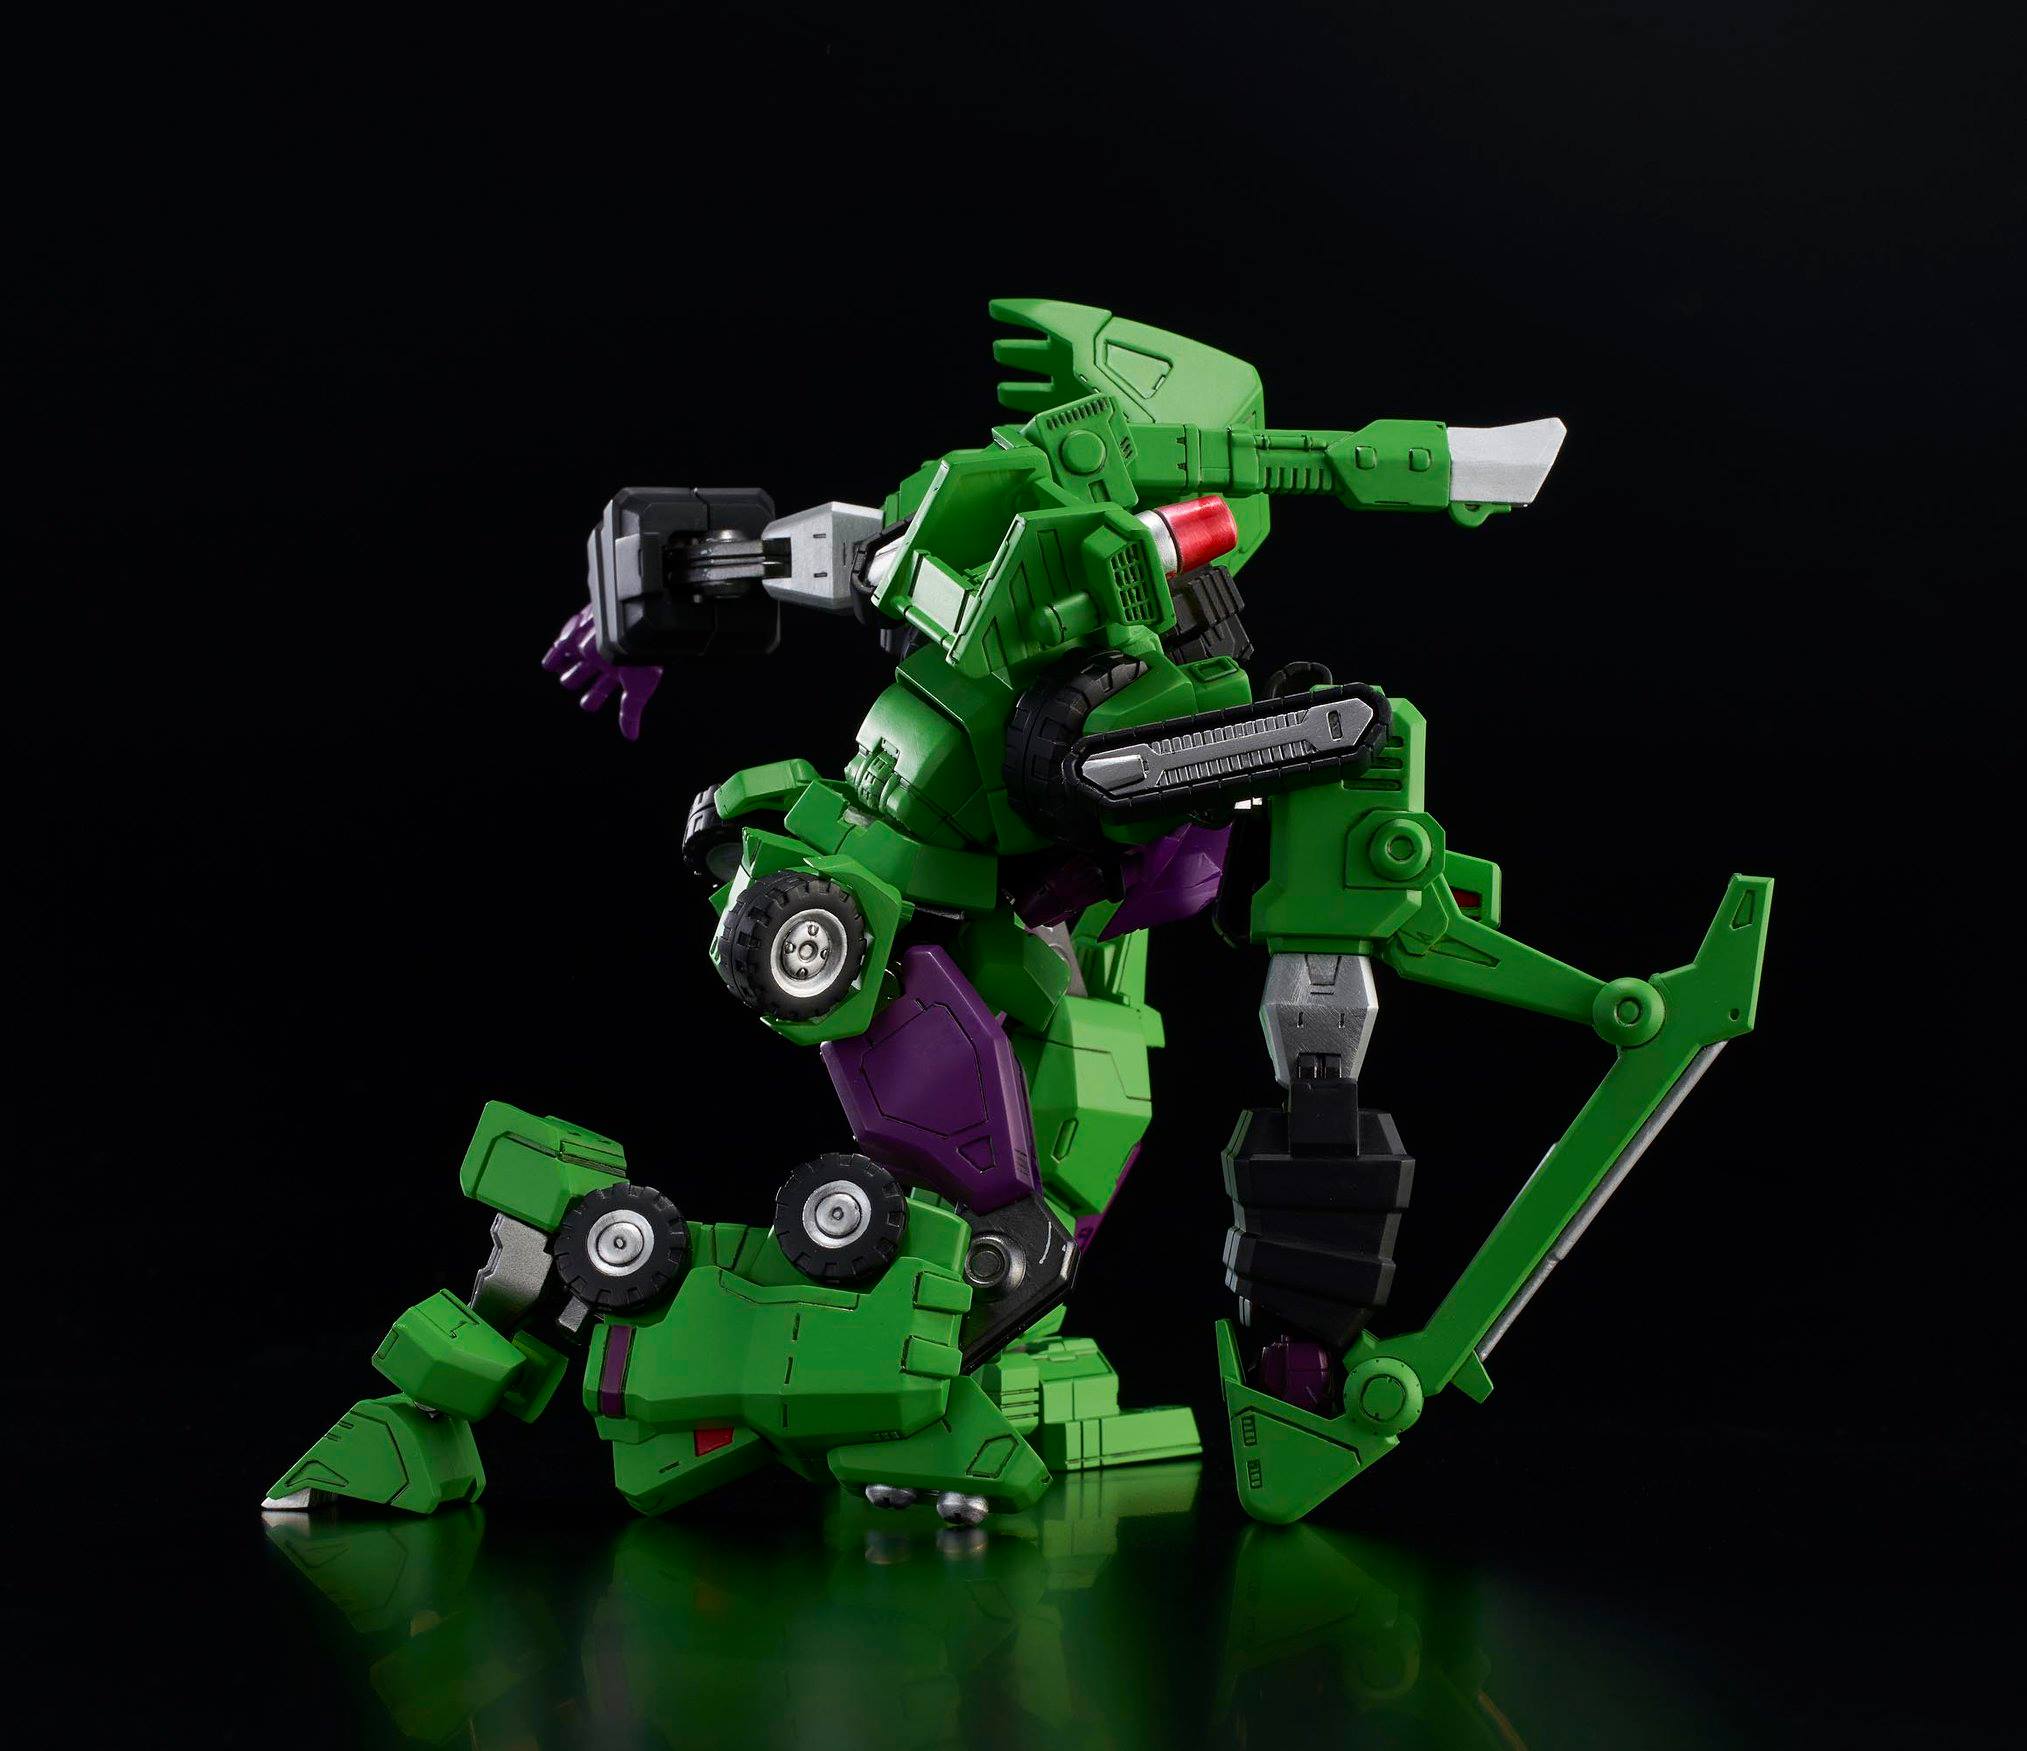 Flame Toys - Transformers - Furai Model 11 - Devastator (Model Kit) - Marvelous Toys